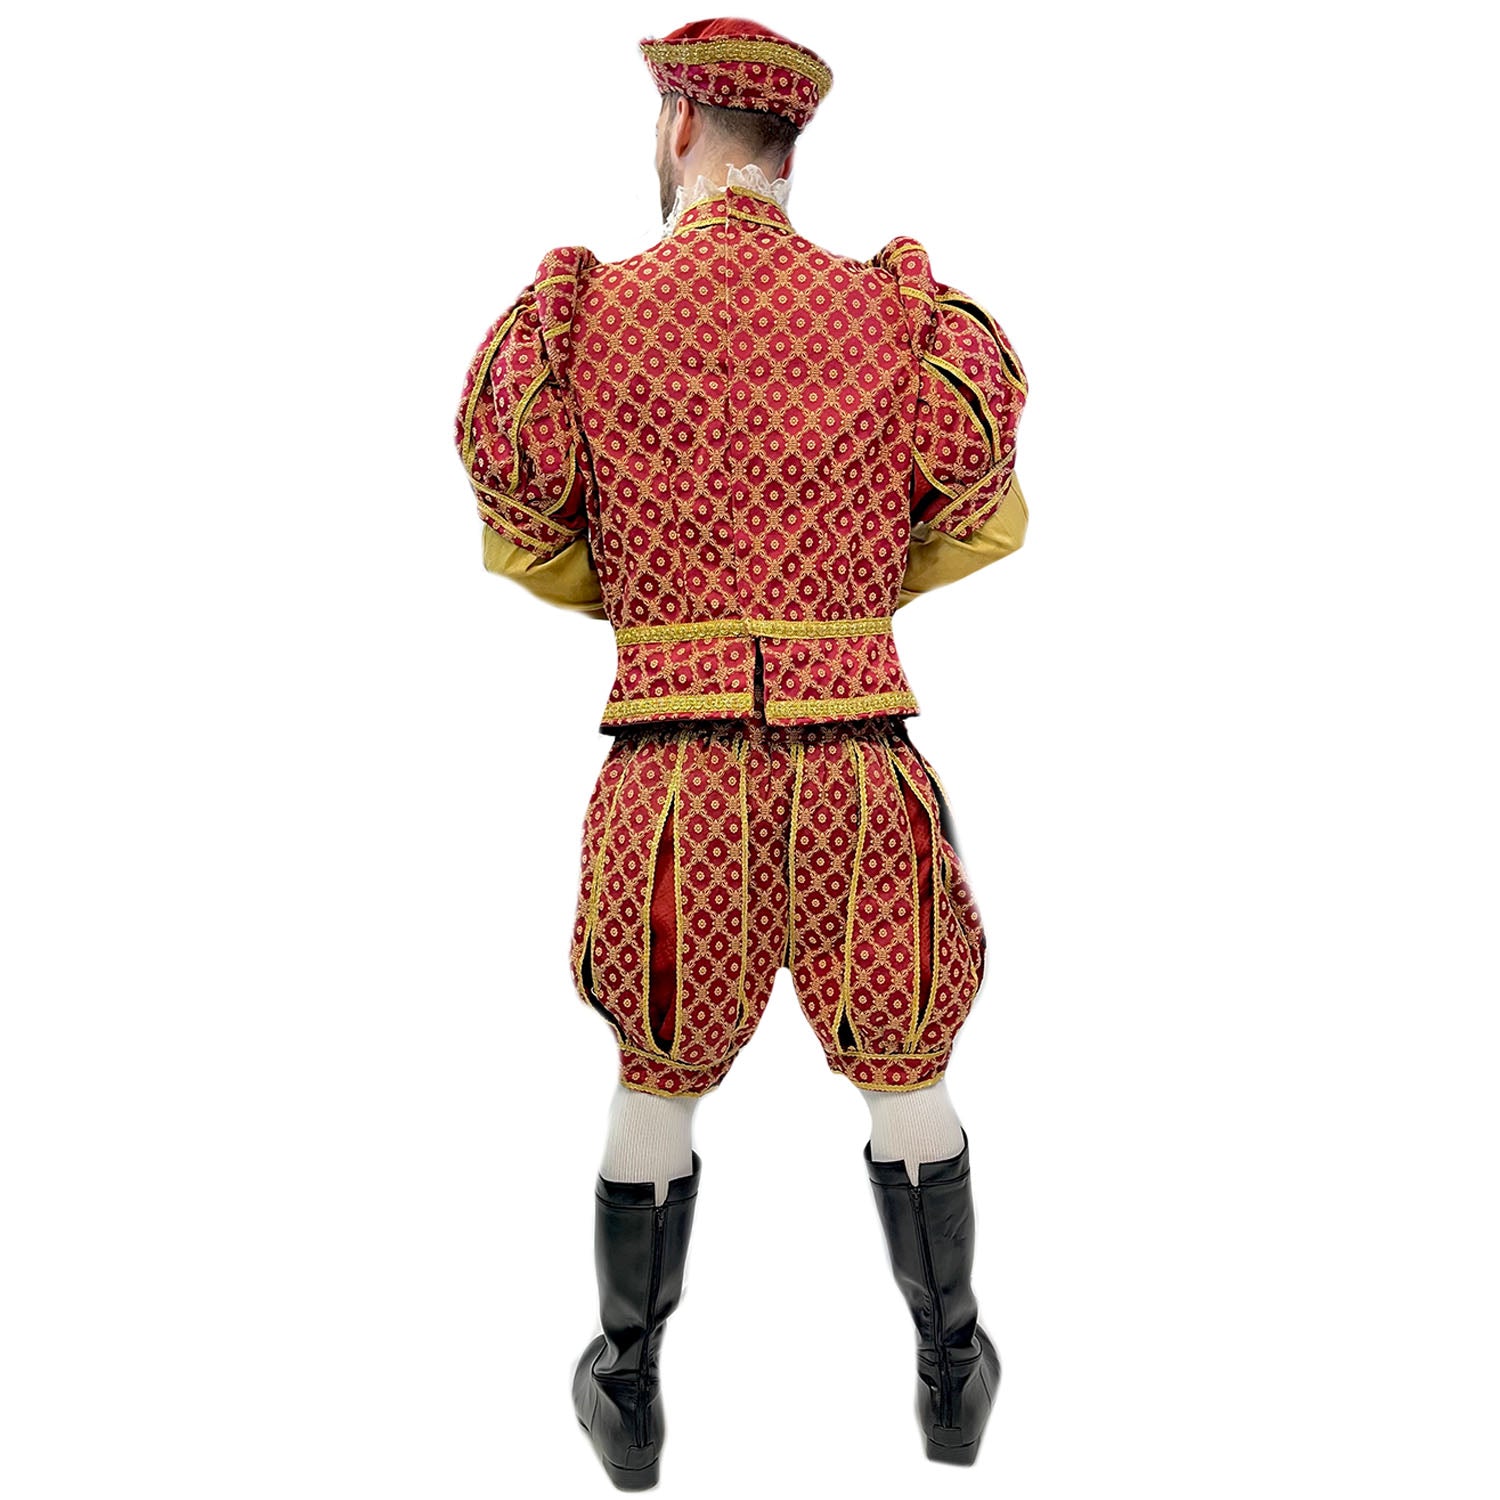 Premium Medieval Golden Lord Adult Costume